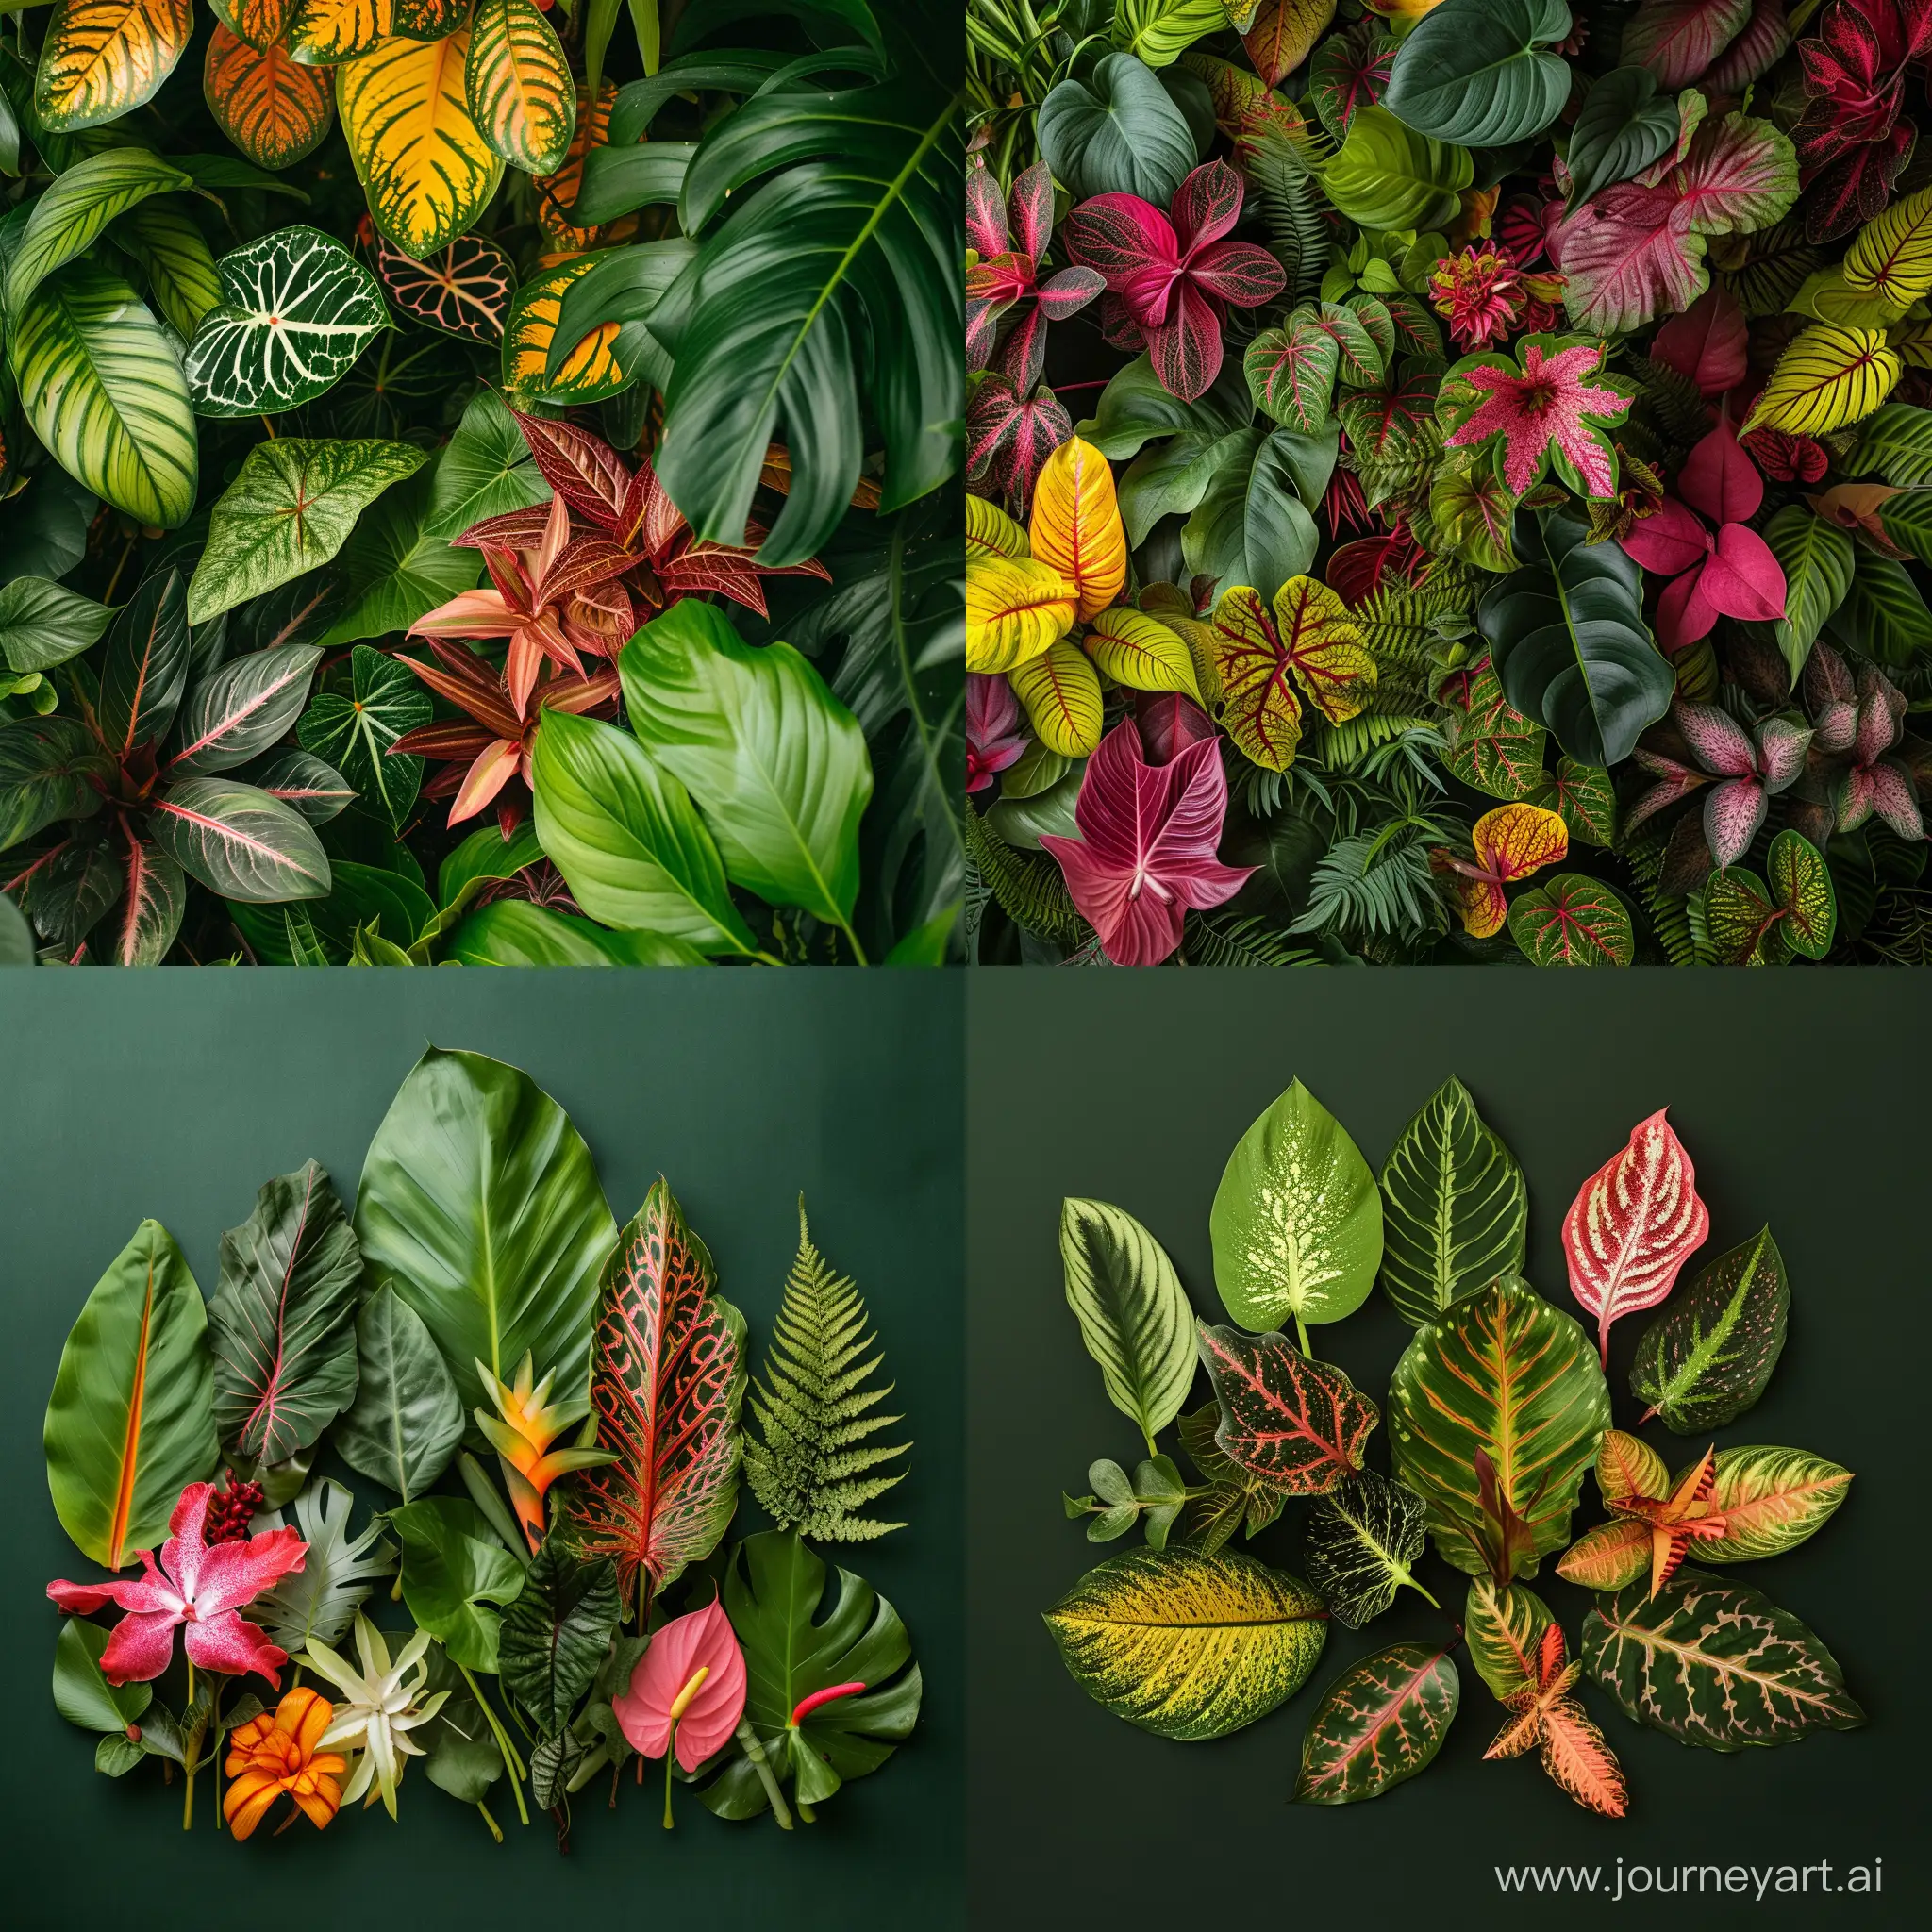 Exotic-Plants-of-the-World-Showcase-Celebrating-Diversity-in-Nature